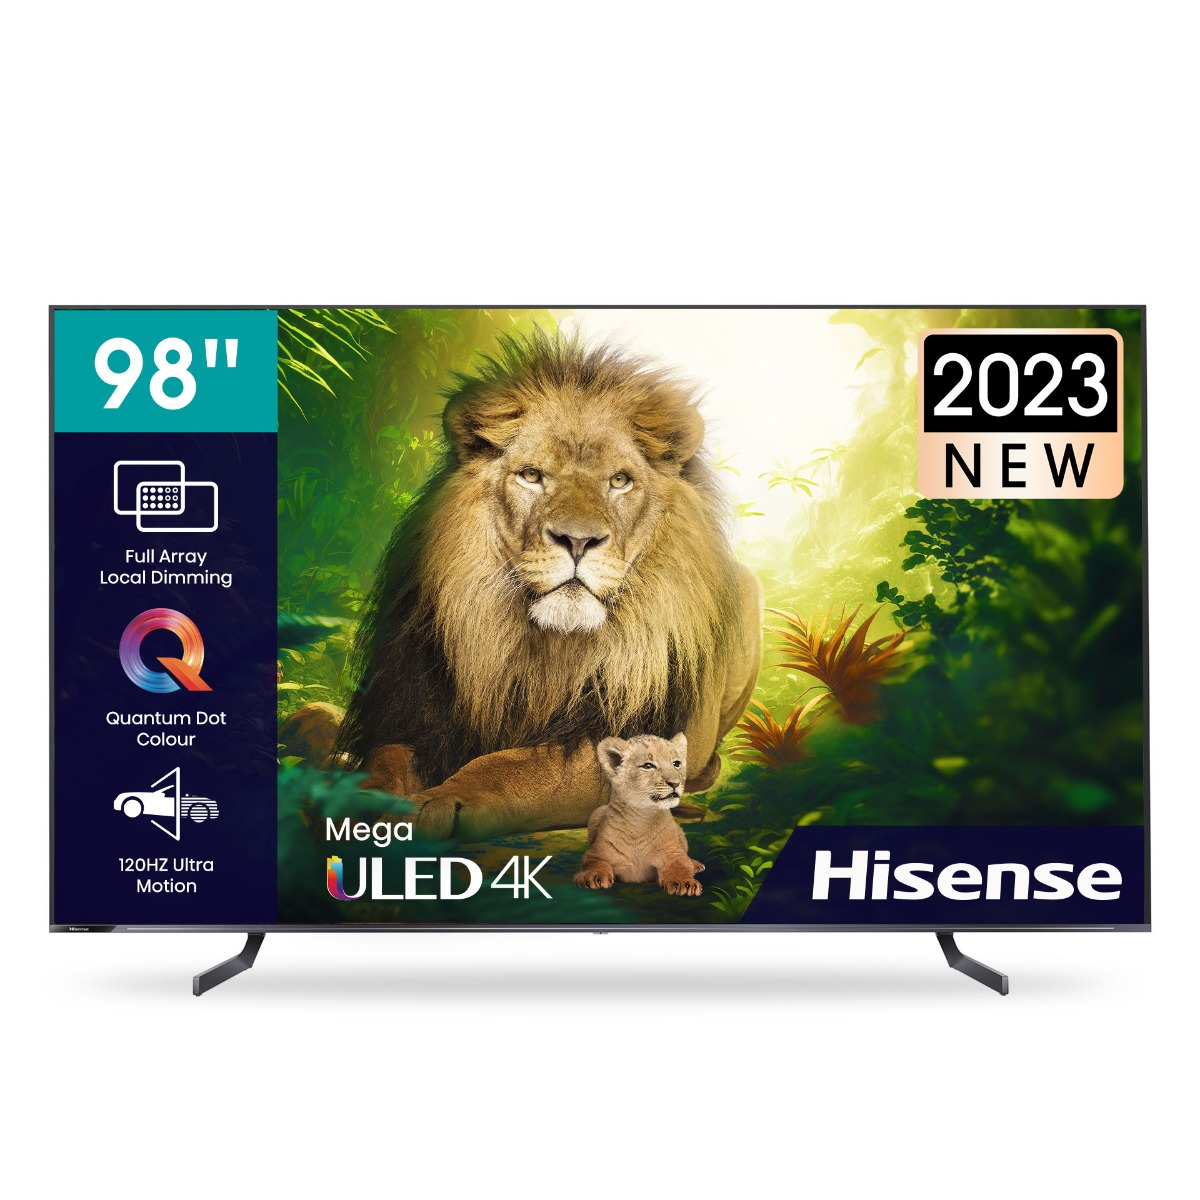 Hisense Smart TV 98 Inch, LED 4K UHD - 98U7H